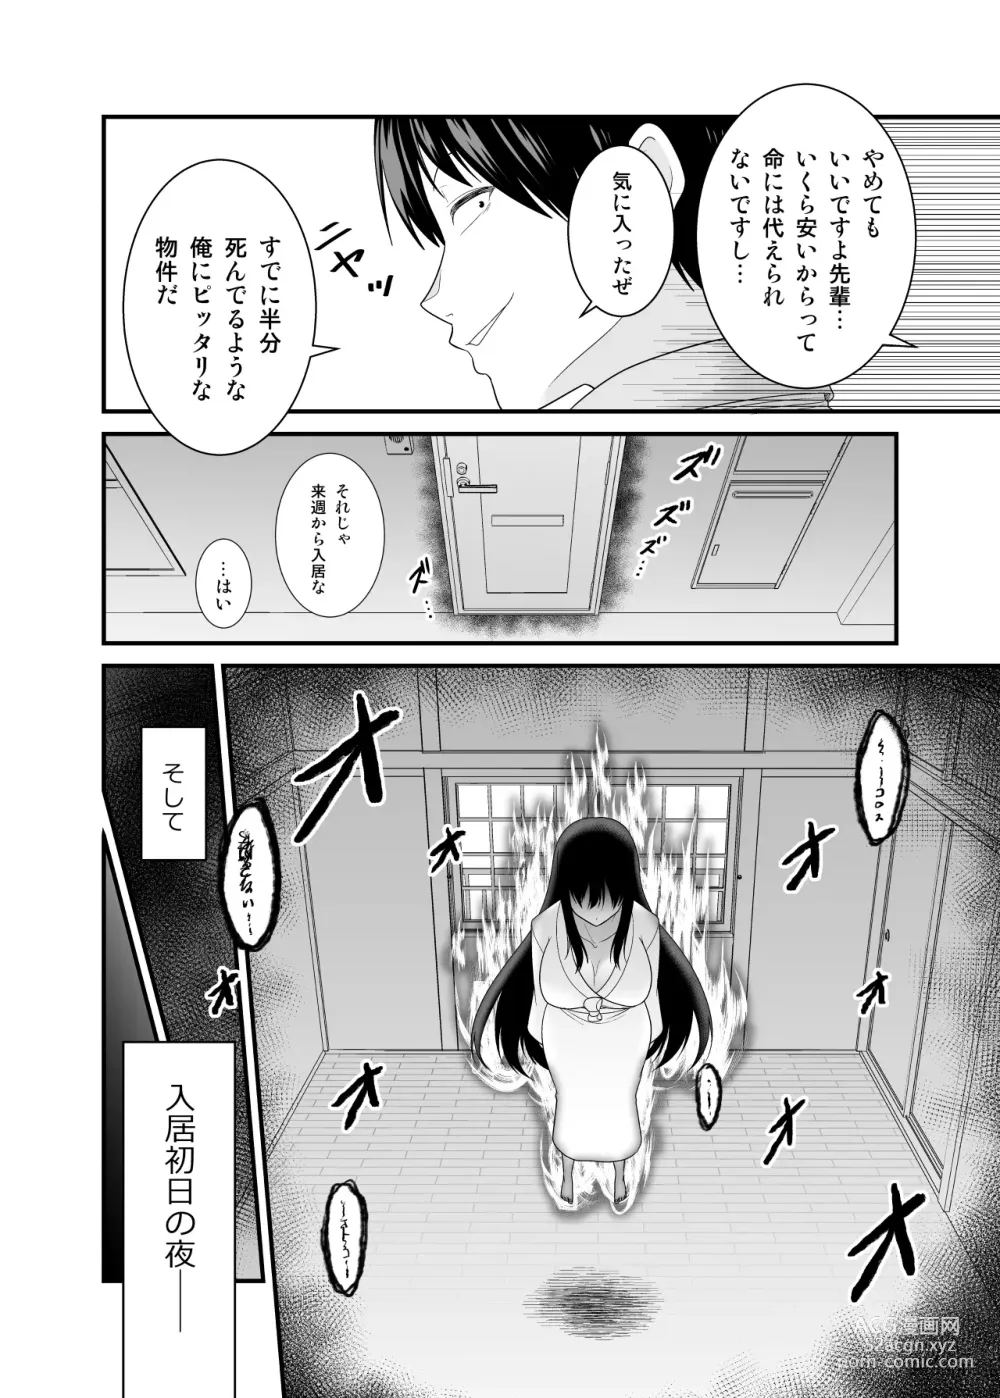 Page 5 of doujinshi ヤバい事故物件に女幽霊が出たけど無職底辺の俺はセックスしまくる